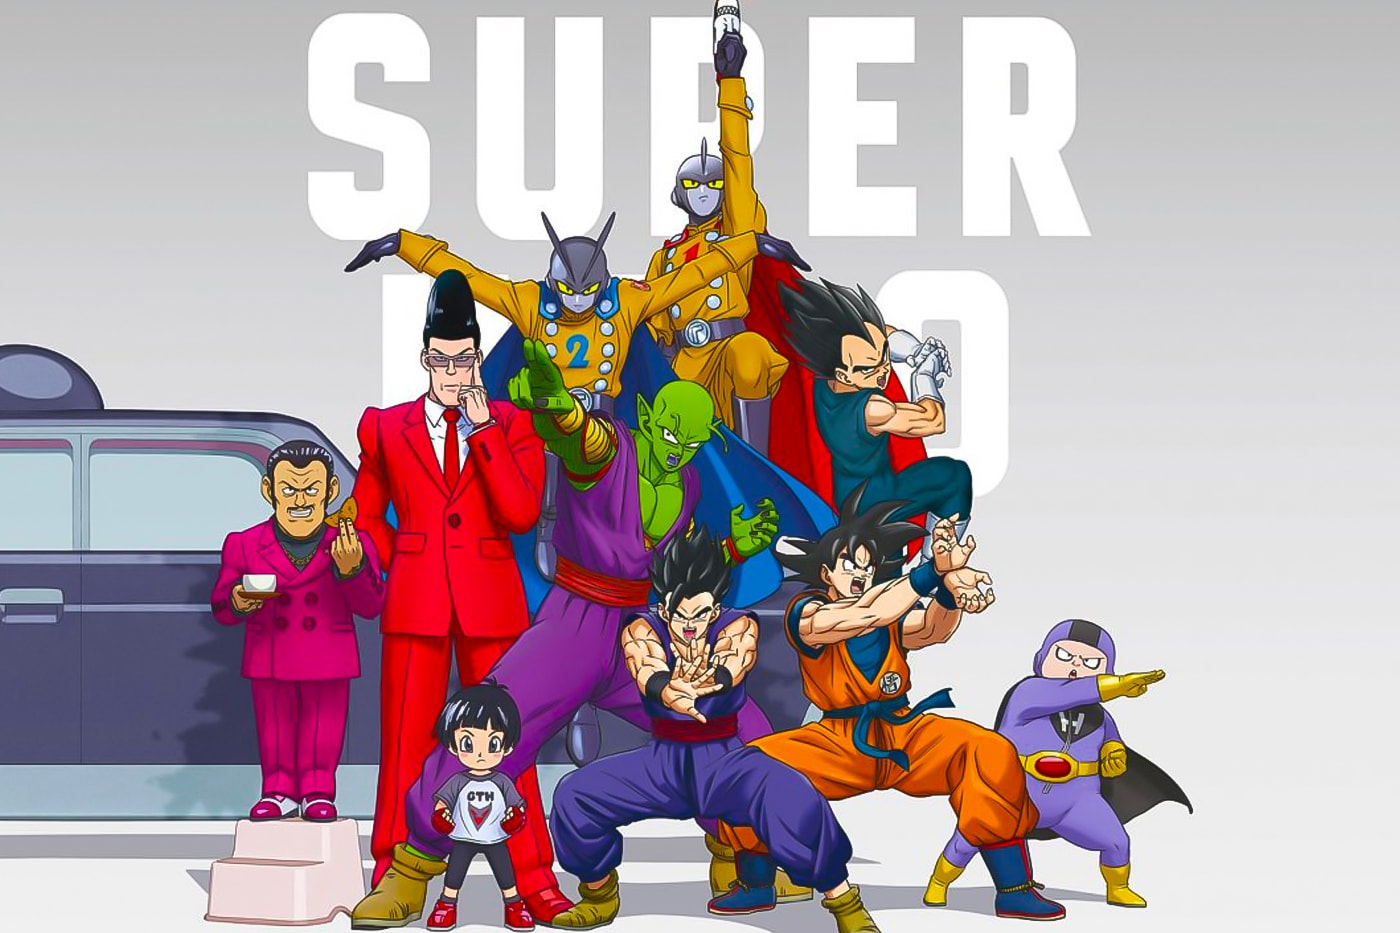 Dragon Ball Super: SUPER HERO  HIDDEN CHARACTER TRAILER 